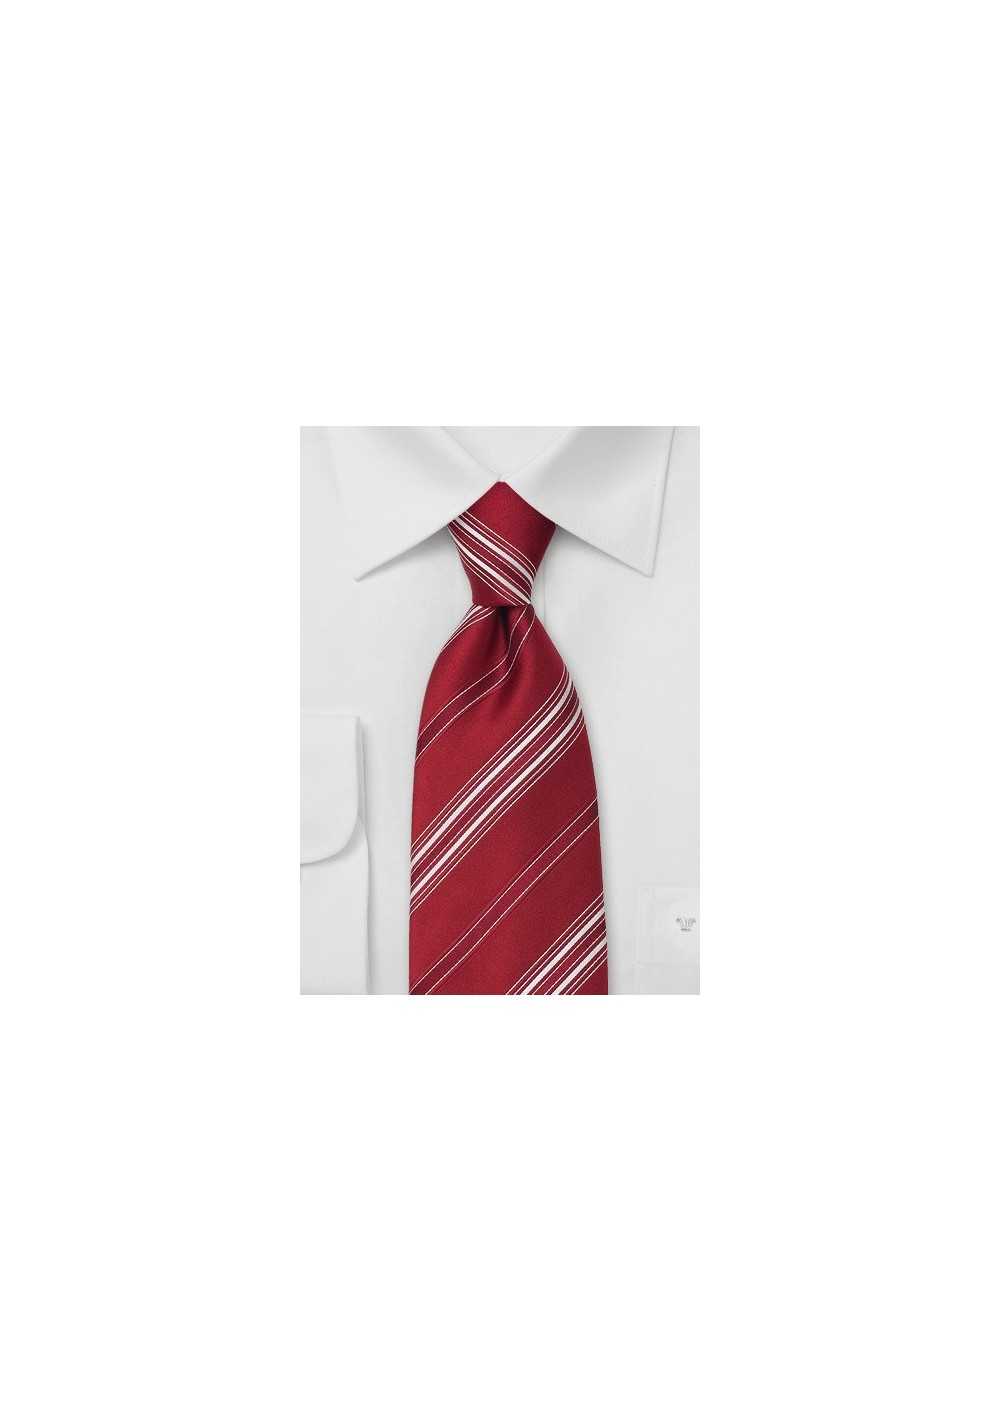 Italian Designer Ties - Red Striped Tie by Cavallieri